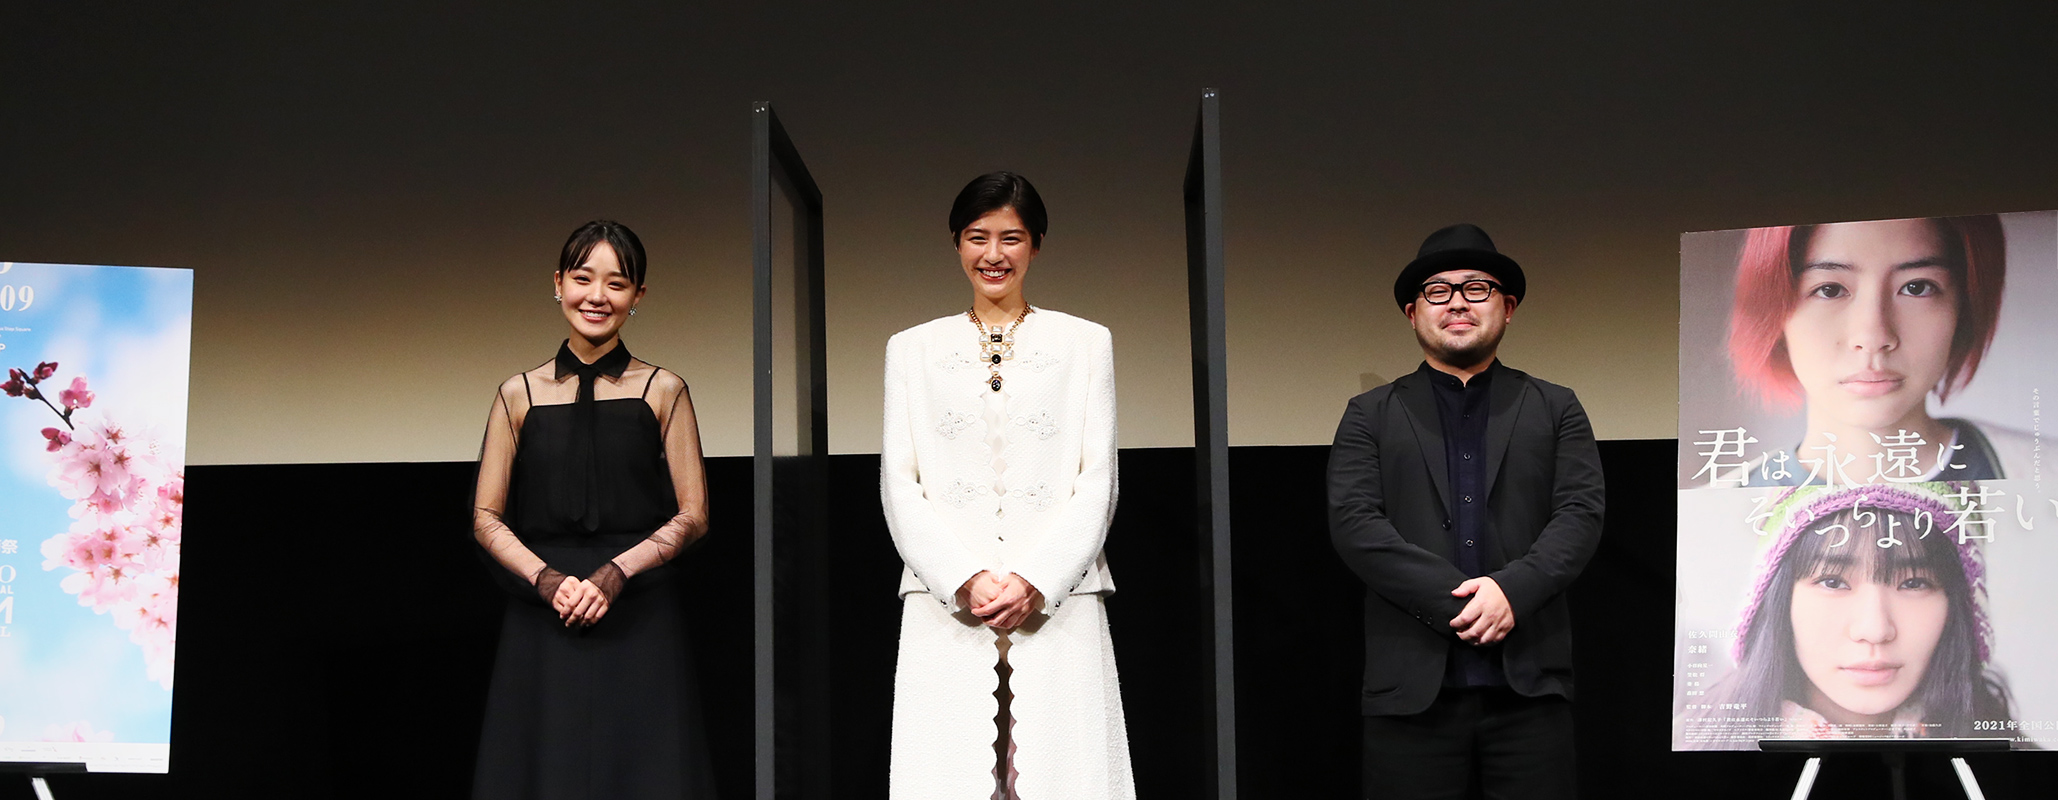 Eternally Younger Than Those Idiots (SA) Ryohei Yoshino(Director),  Yui Sakuma(Actress), Nao(Actress)